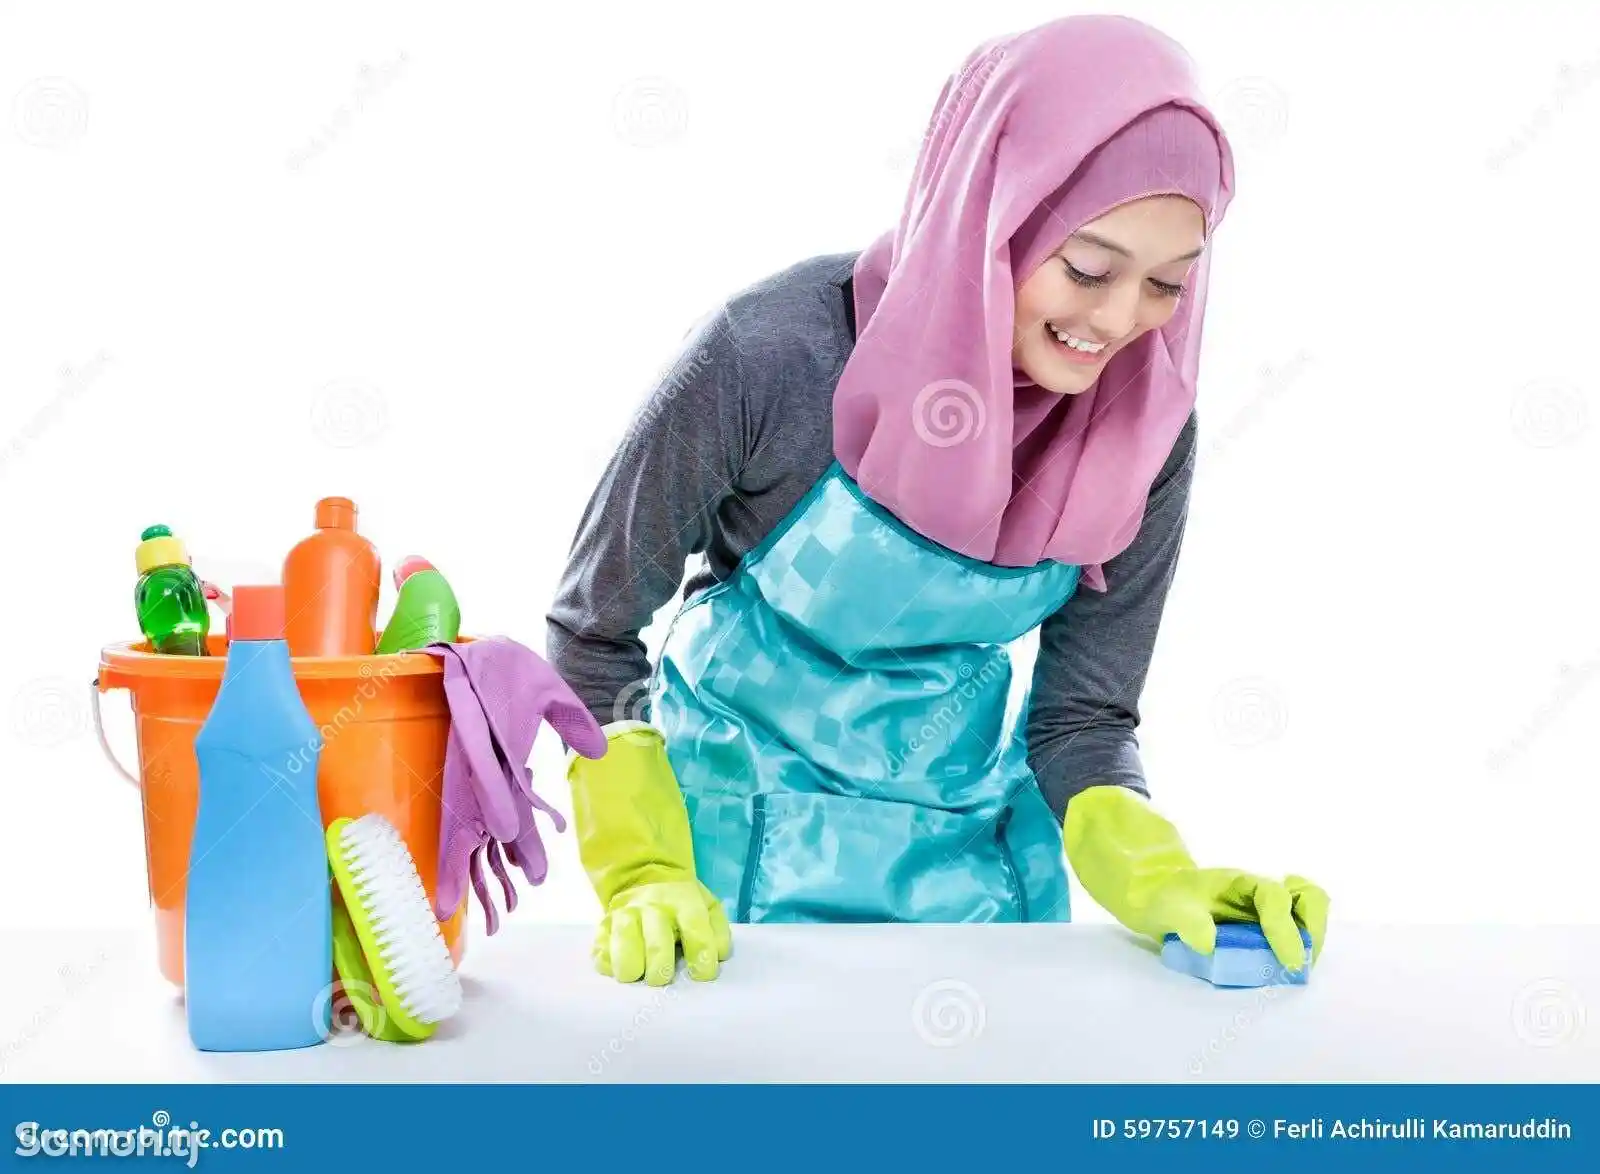 Услуги уборки и чистки квартир-2